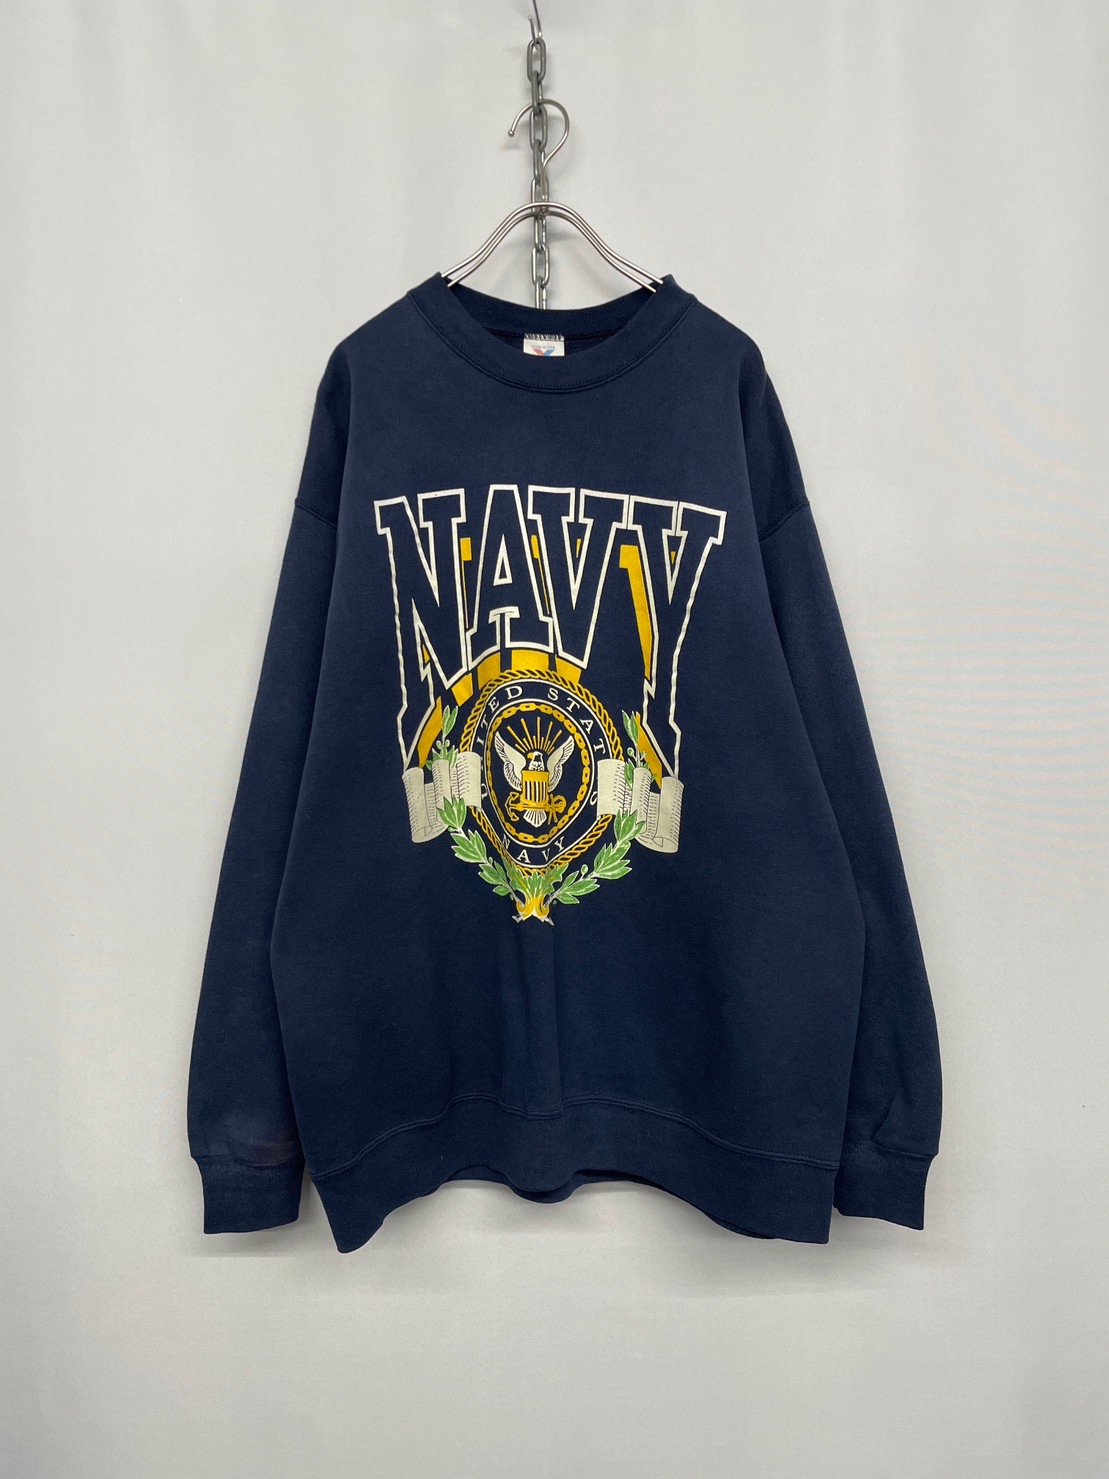 1990’s “U.S.NAVY” Print Sweat Shirt